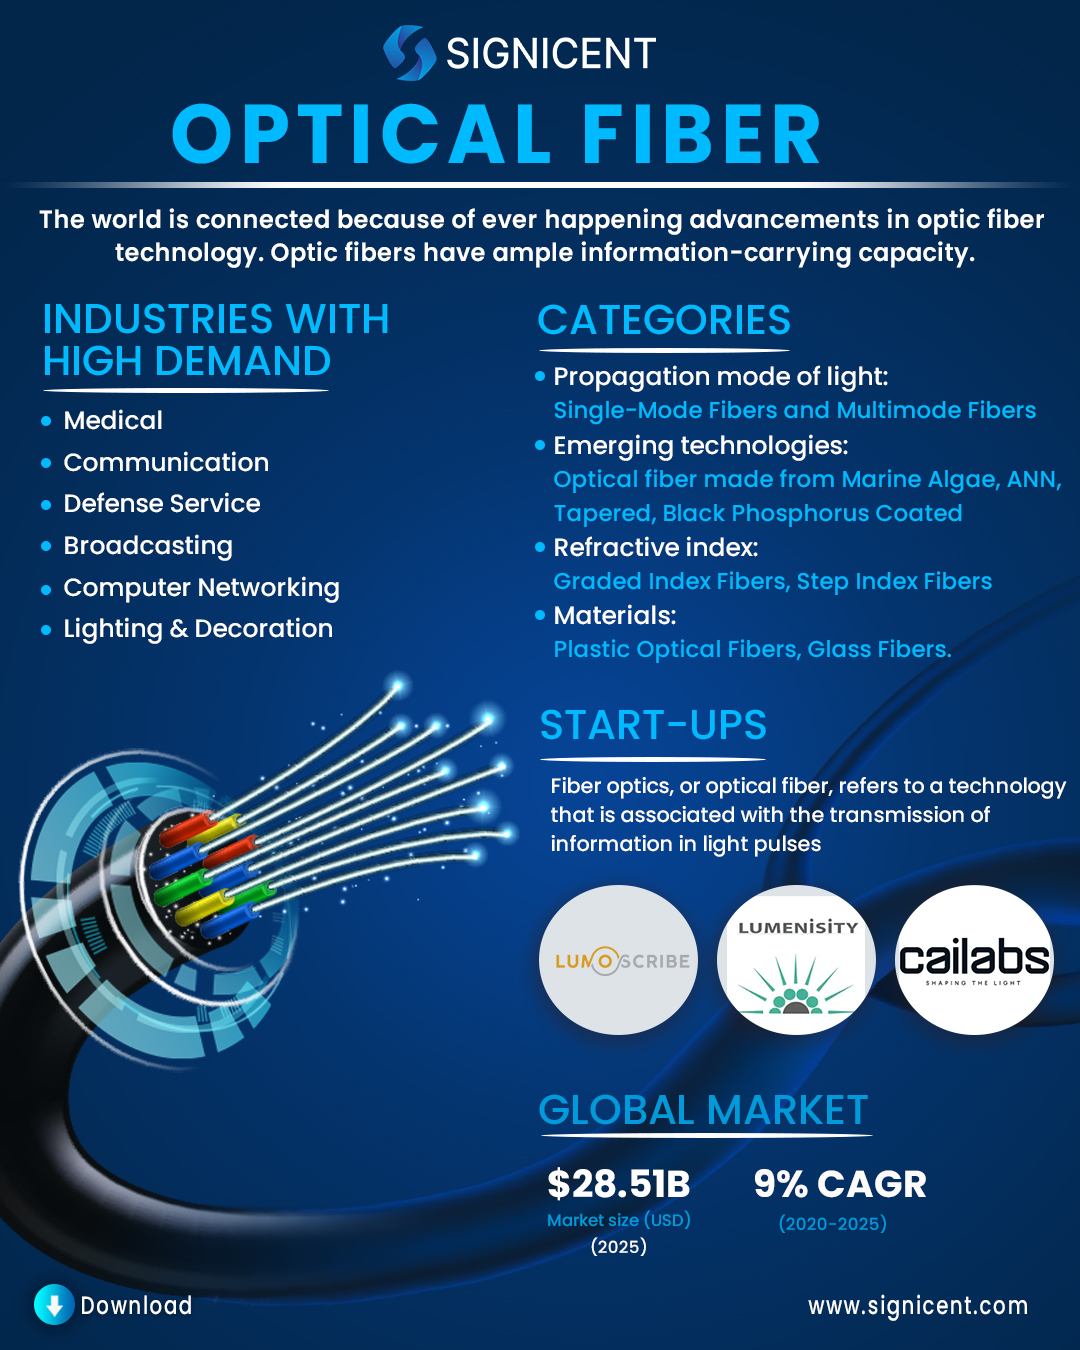 Fiber optic technology advancements